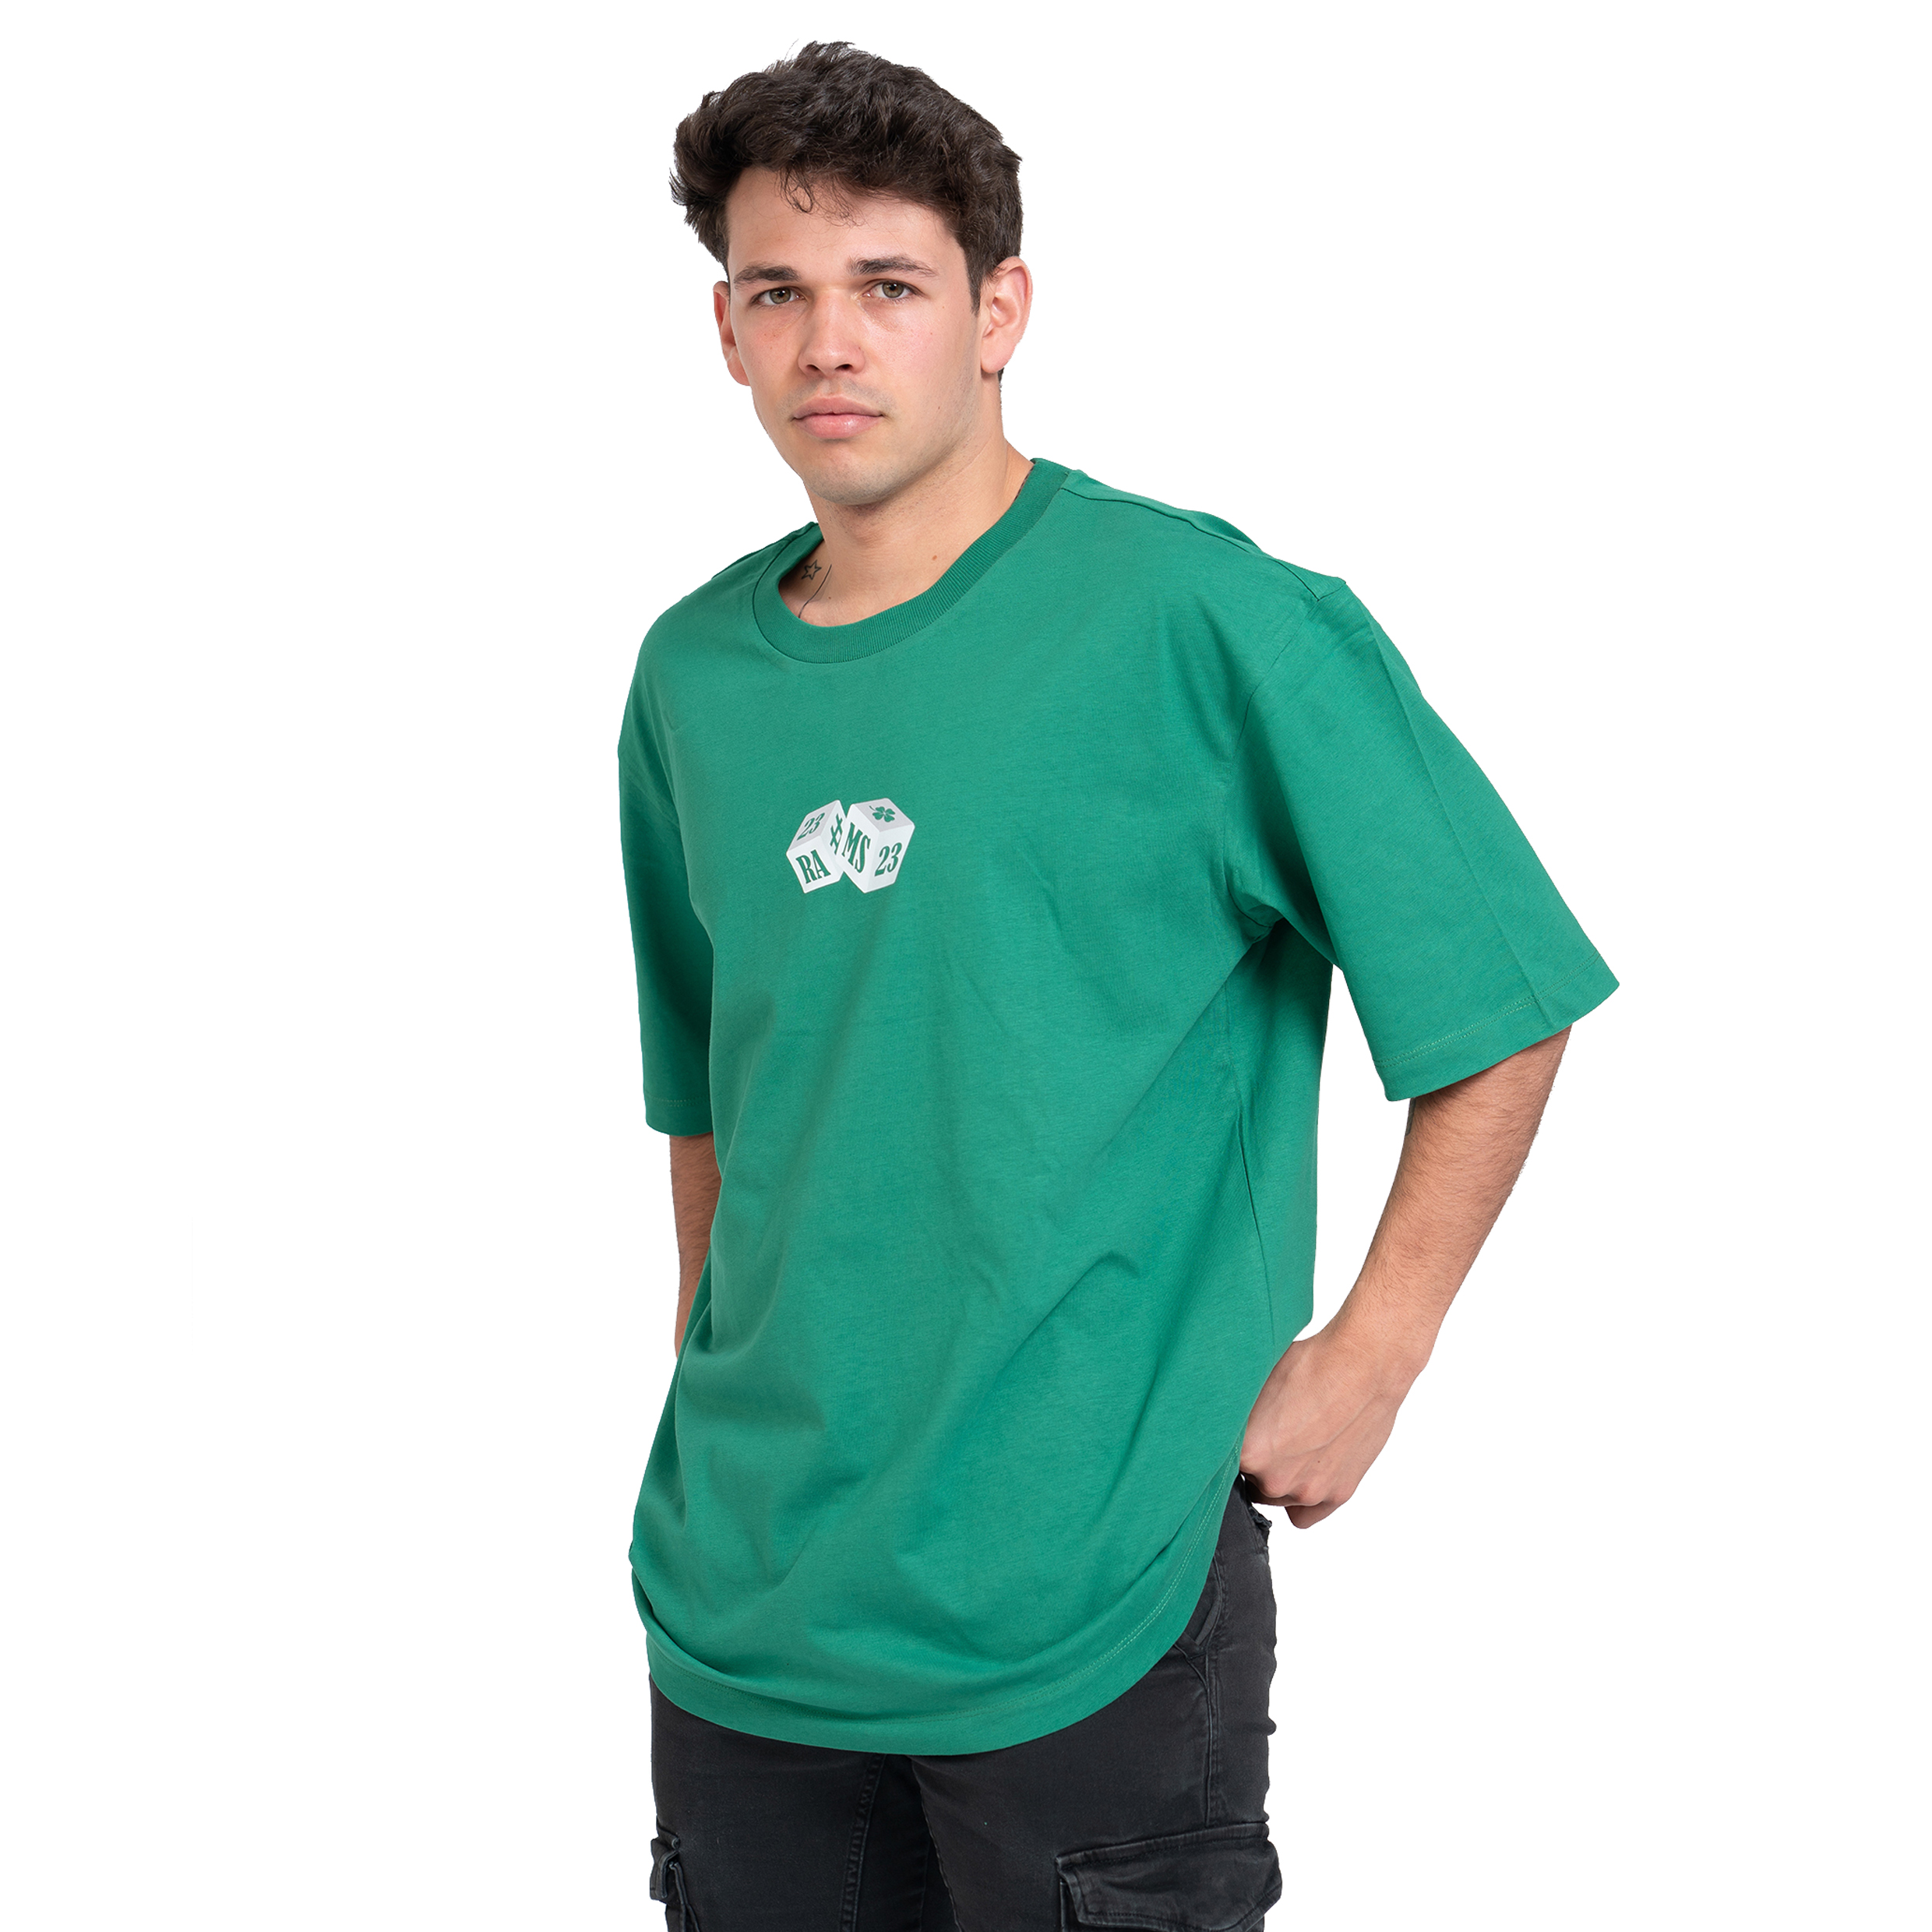 Camiseta Rams 23 Life Has Many Faces - verde - 